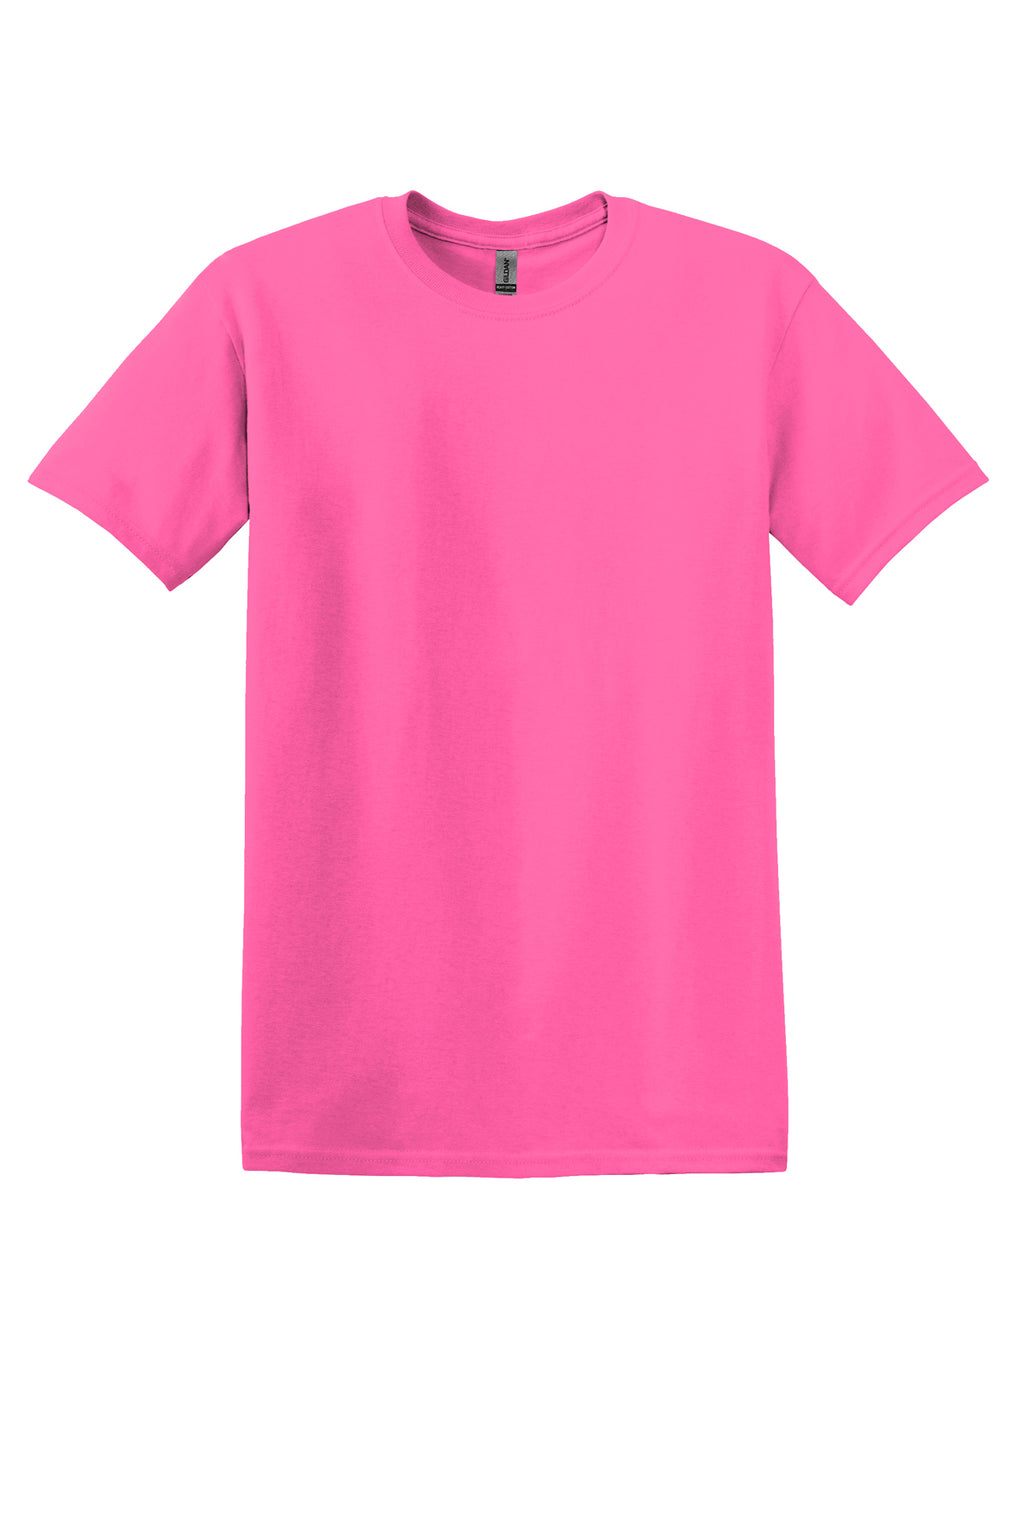 Gildan Mens/Unisex S/S Shirts Safety Pink